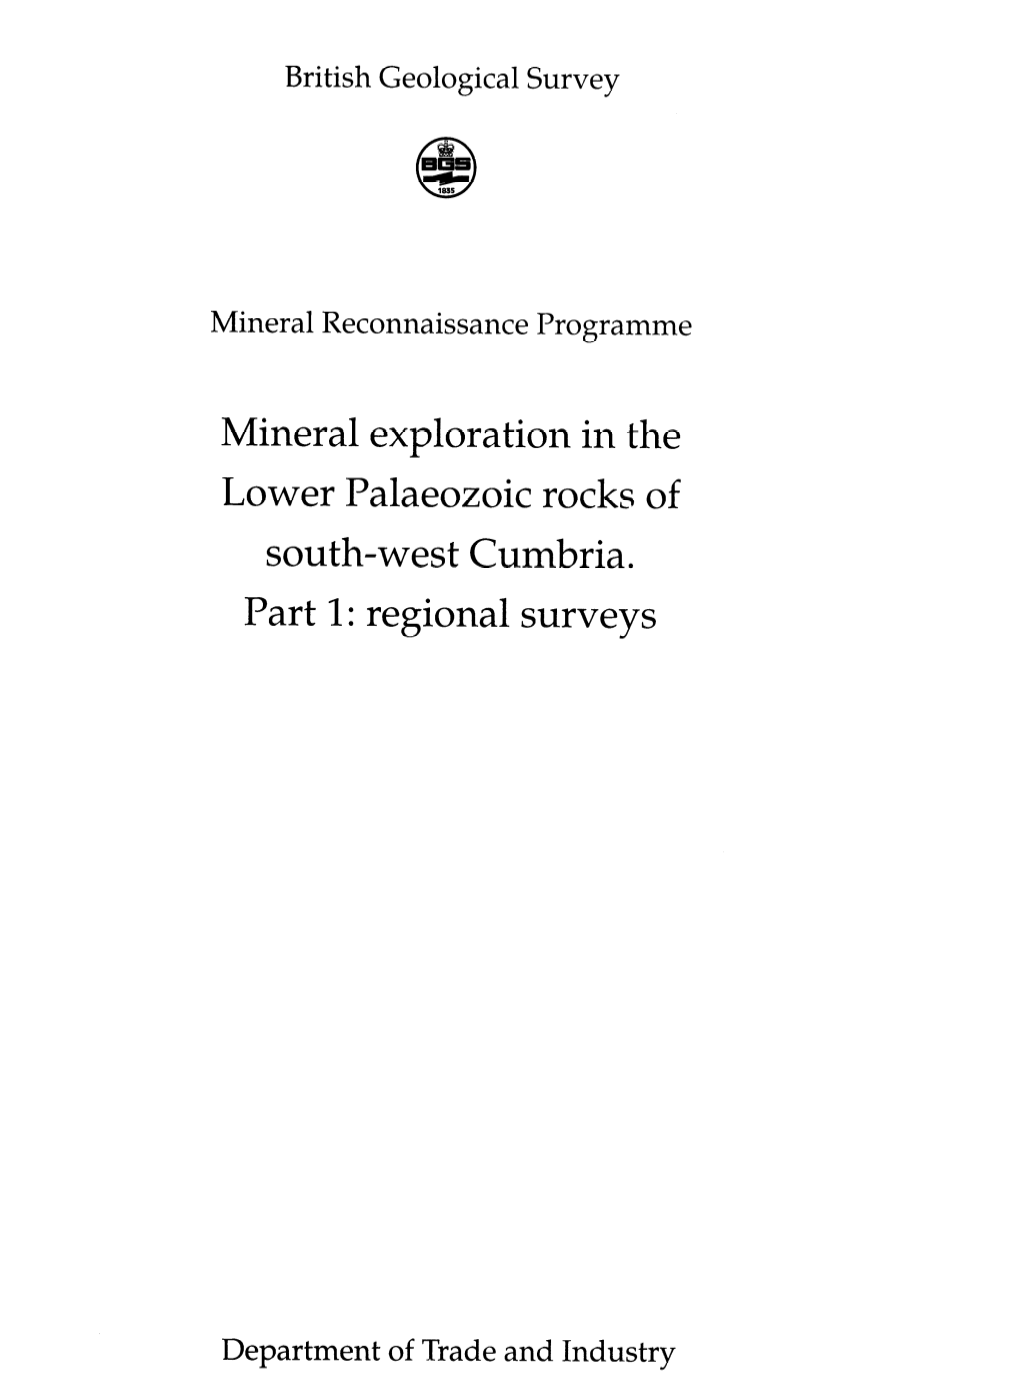 Mineral Reconnaissance Programme | Mineral Exploration